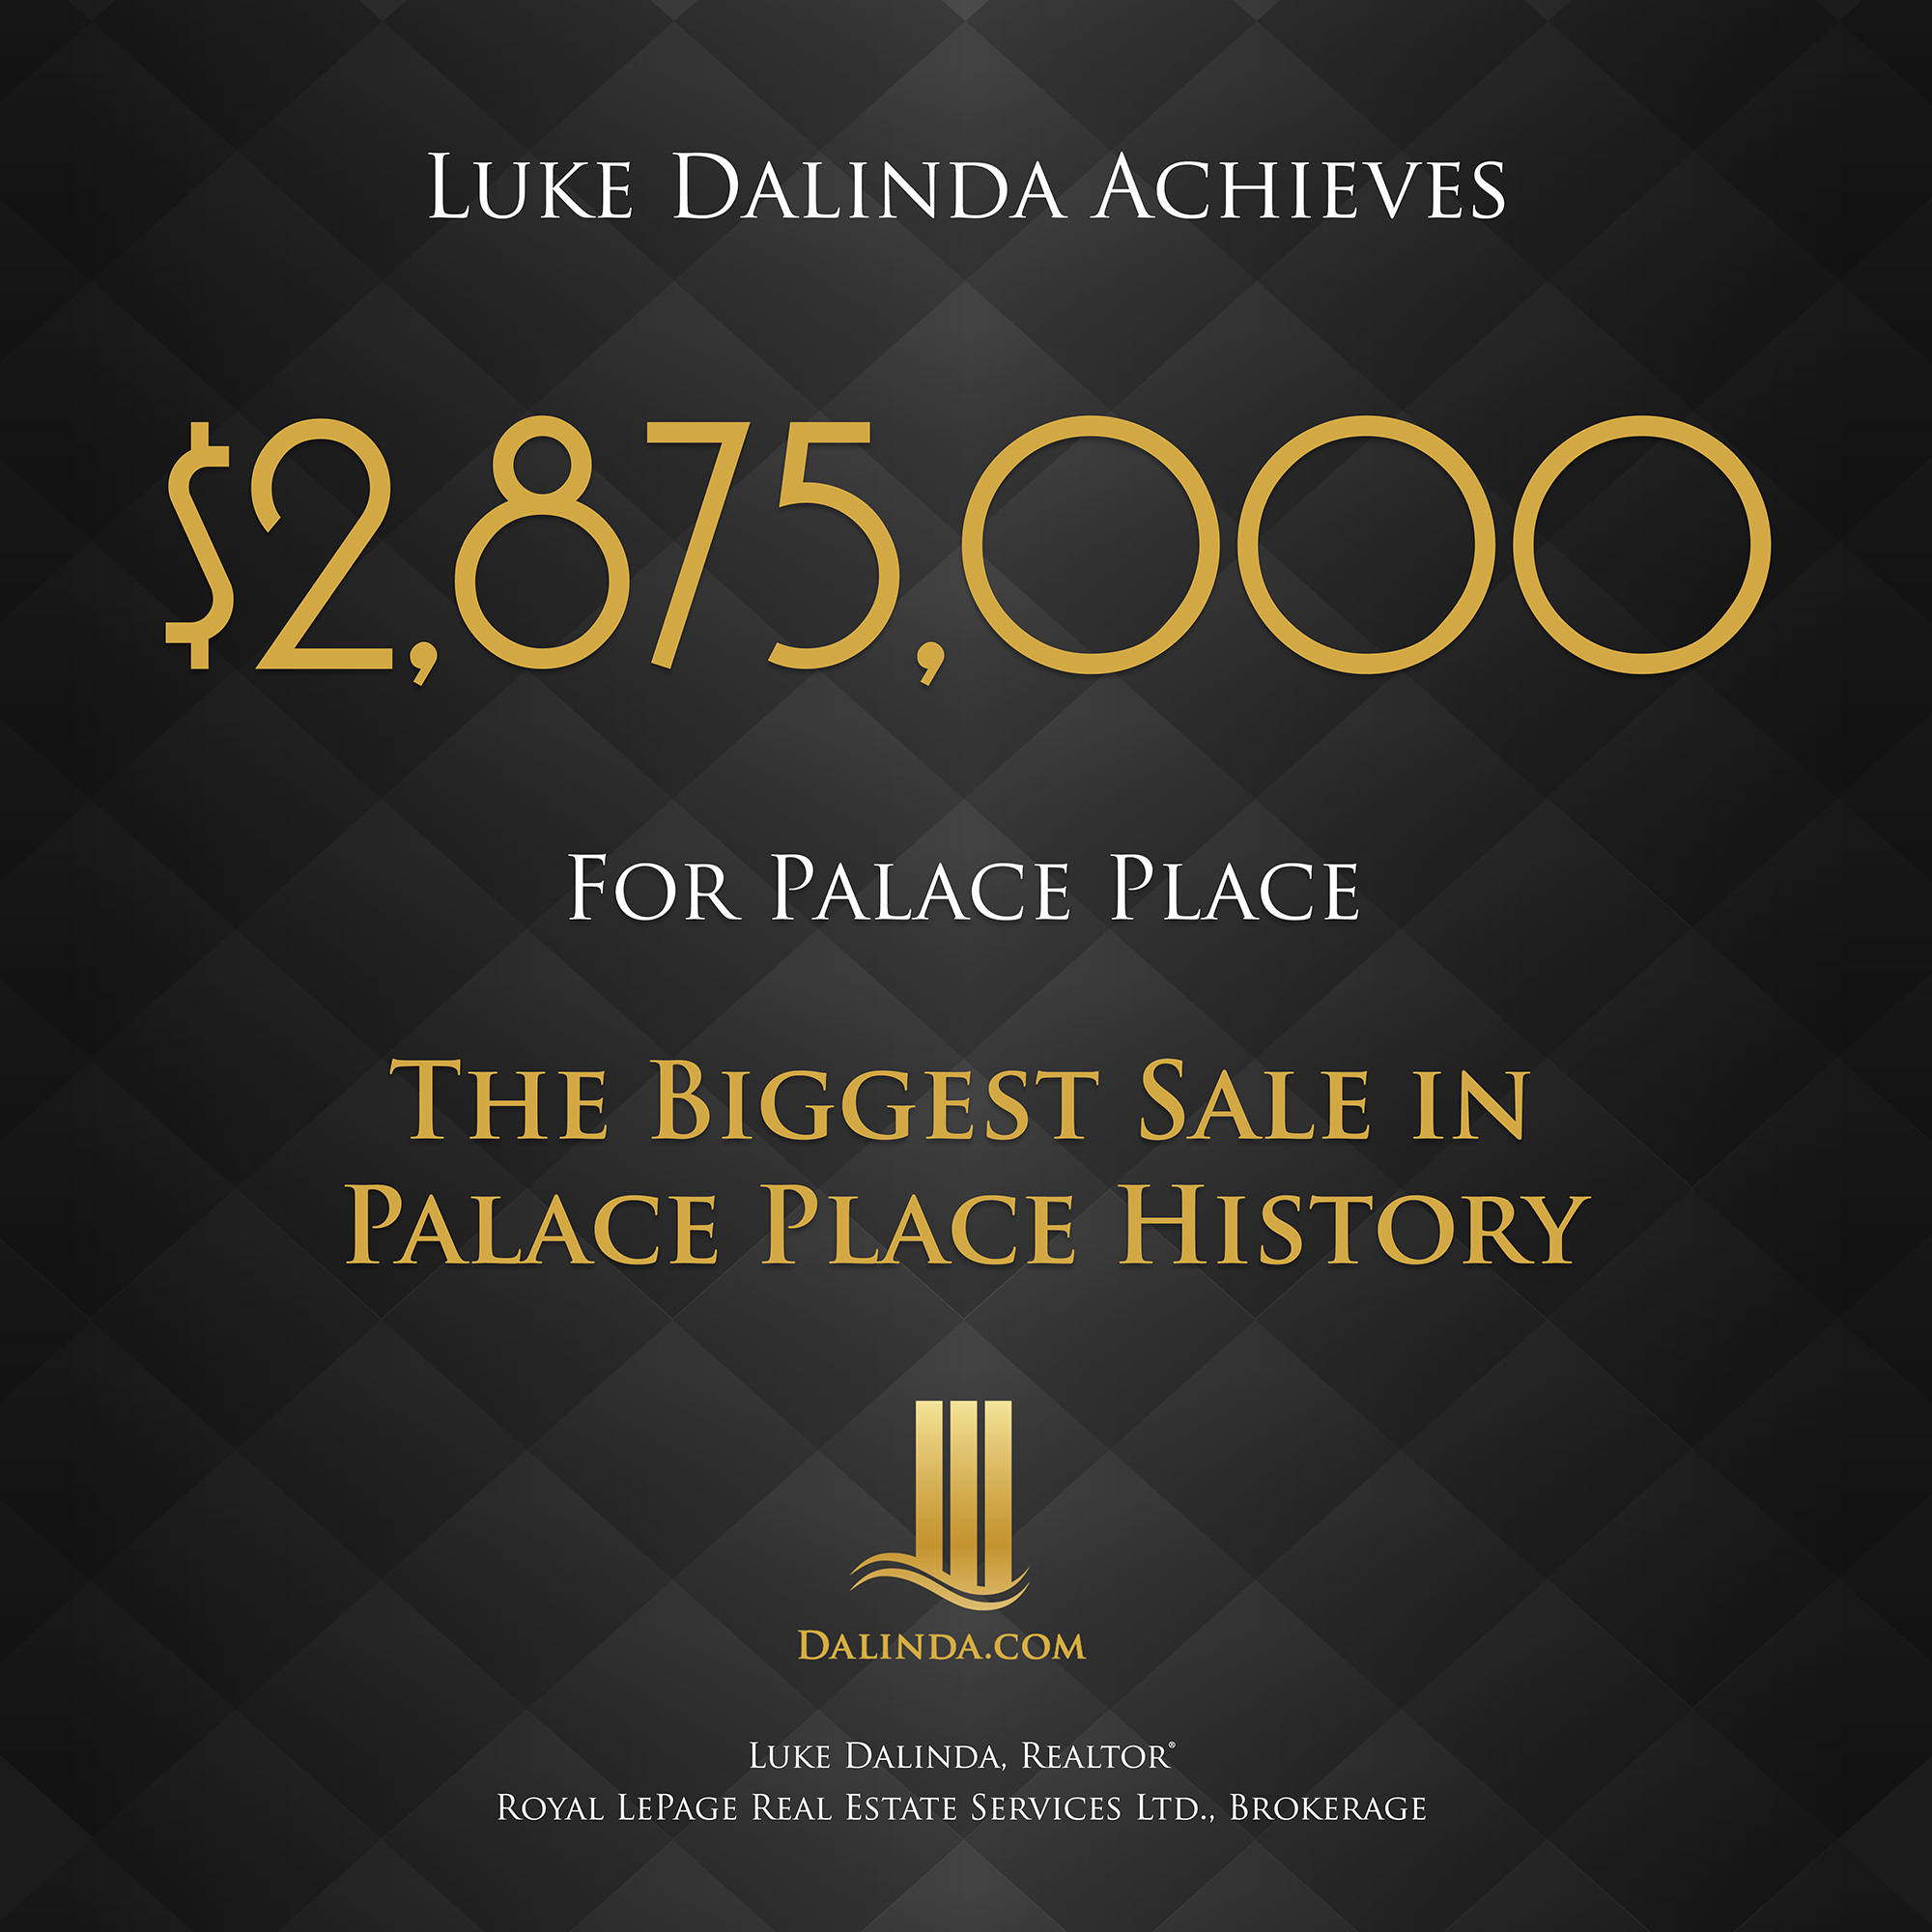 Luke Dalinda Acheives $2.875M